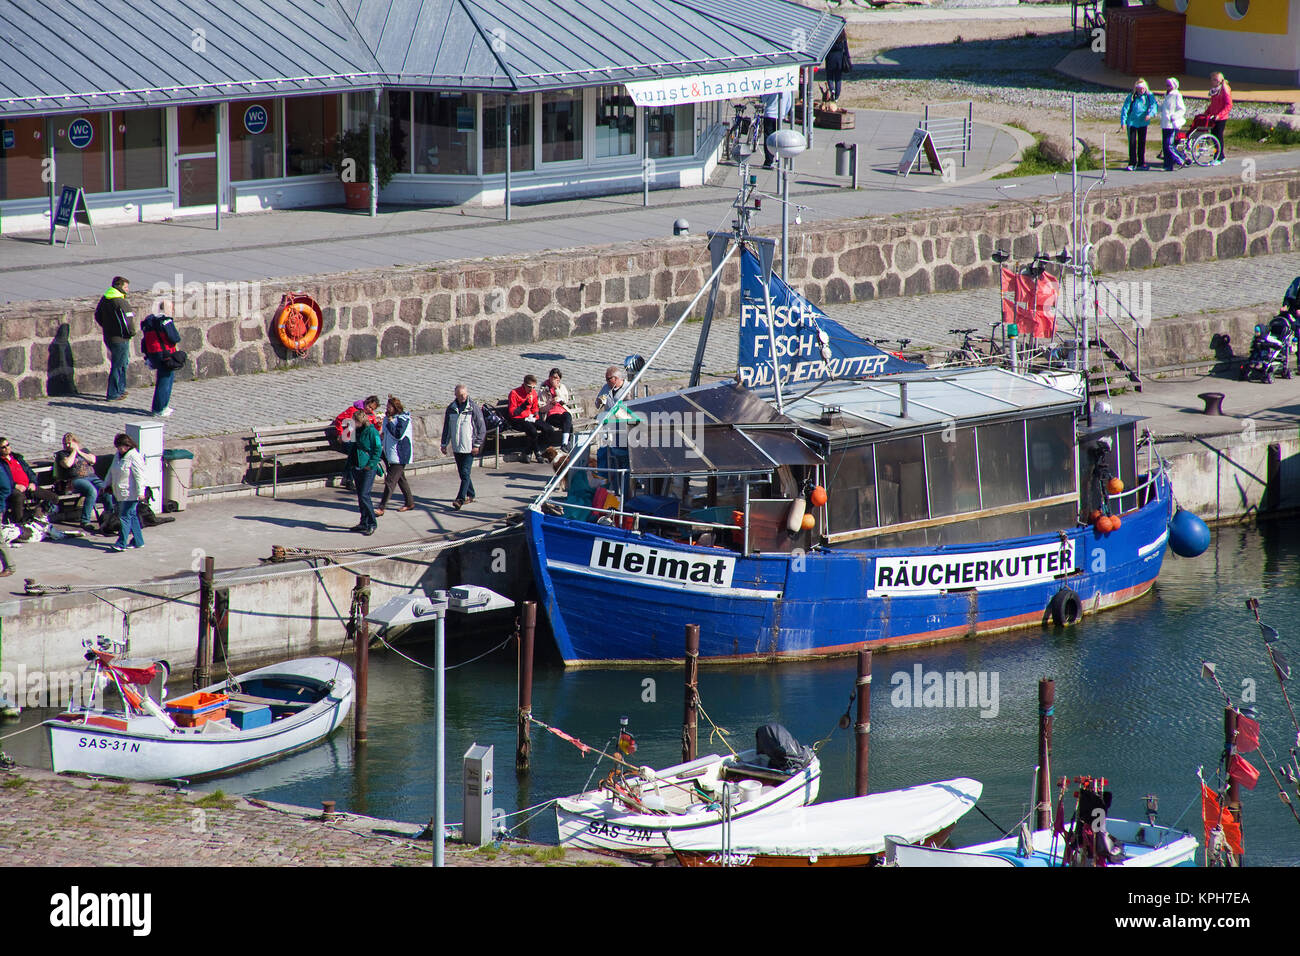 Pesce che fuma fresa al porto di Sassnitz, Ruegen isola, Meclemburgo-Pomerania, Mar Baltico, Germania, Europa Foto Stock